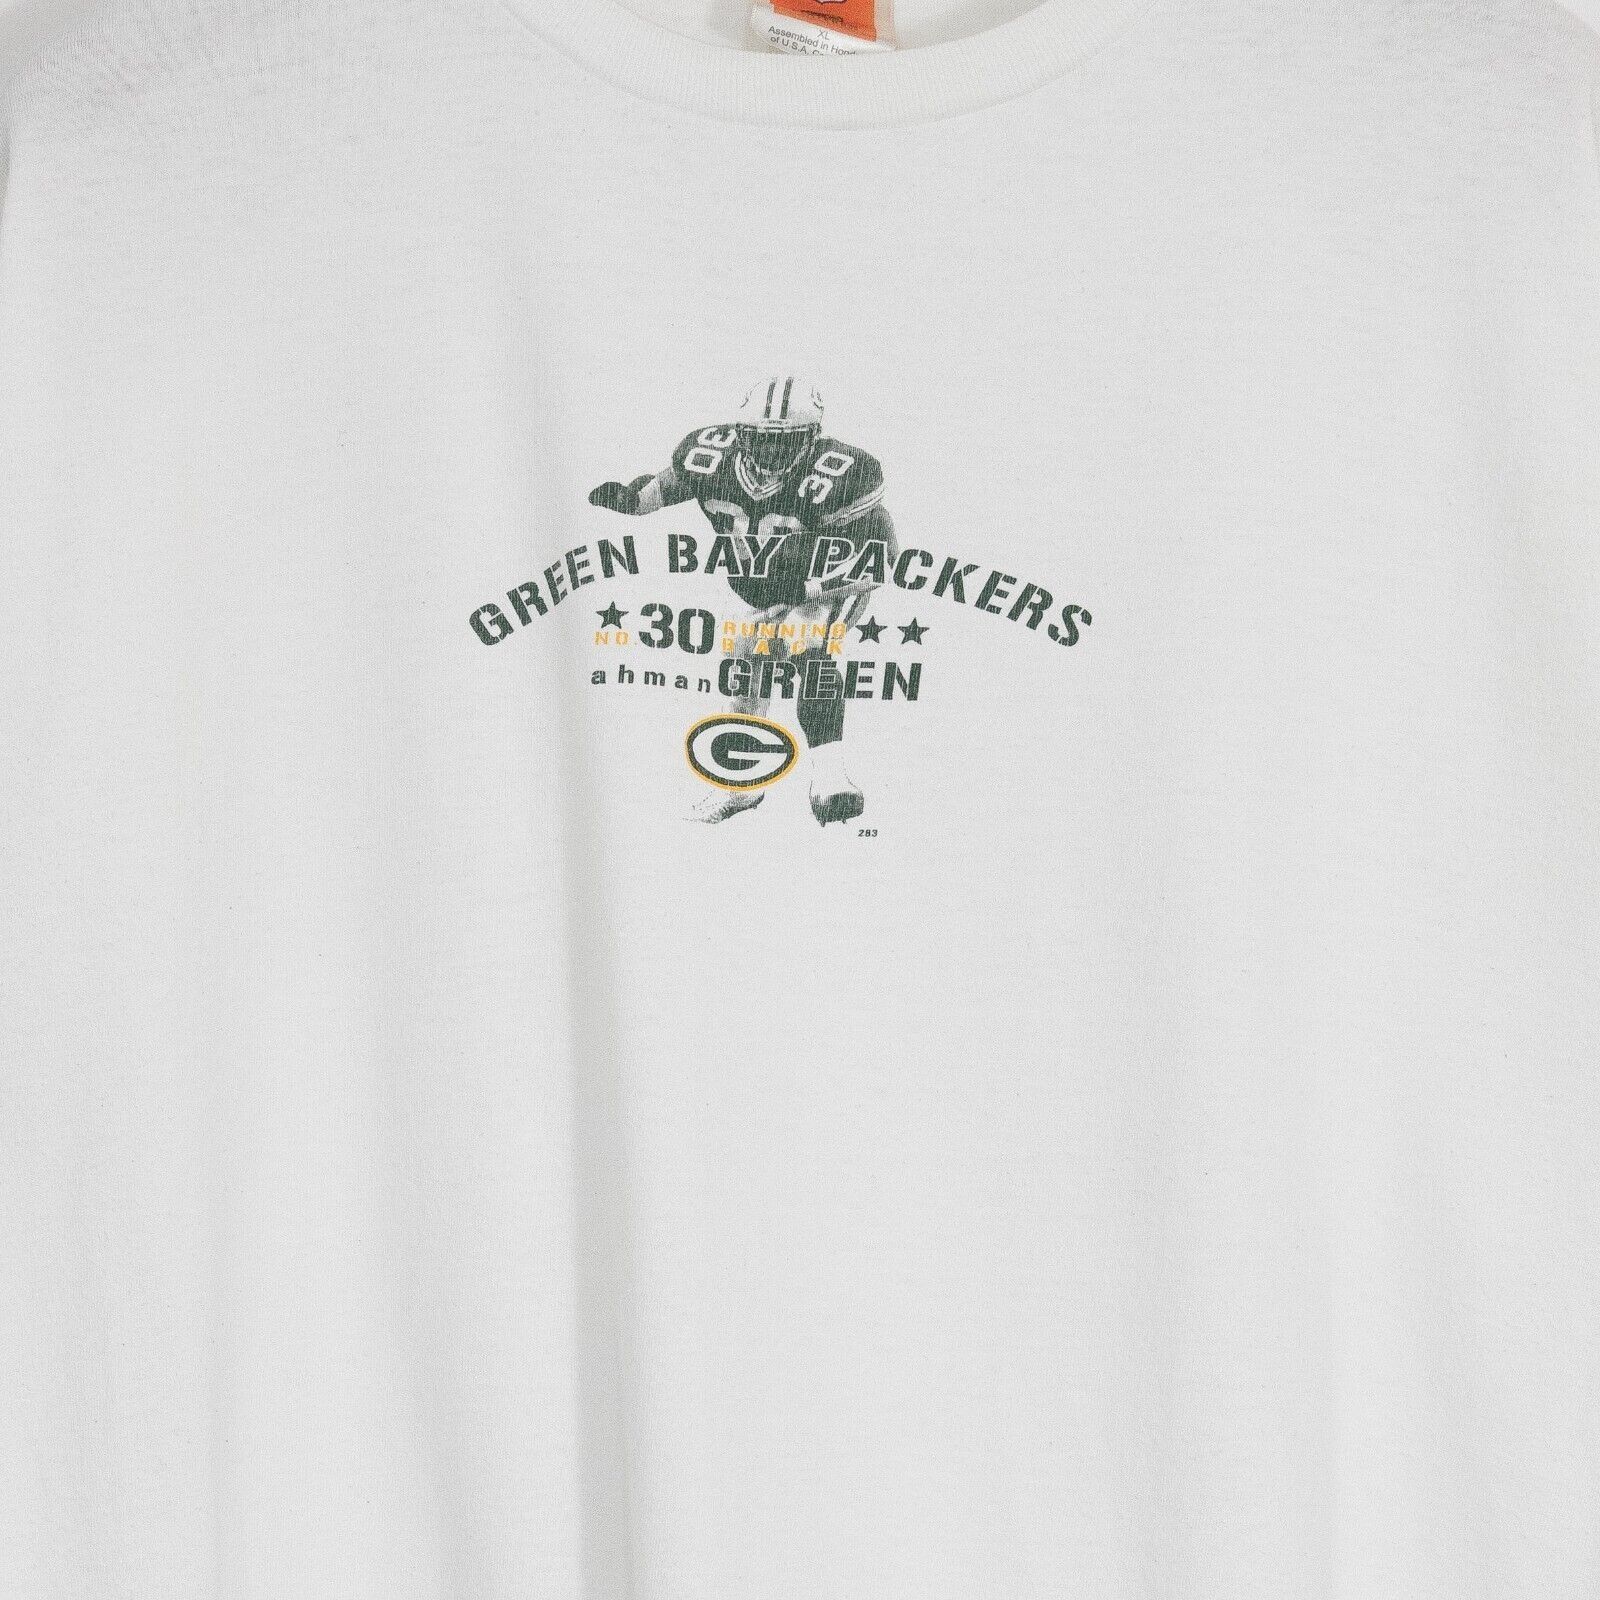 Vintage Vintage Green Bay Packers T Shirt XL - Ahmam Green Faded Size US XL / EU 56 / 4 - 3 Thumbnail